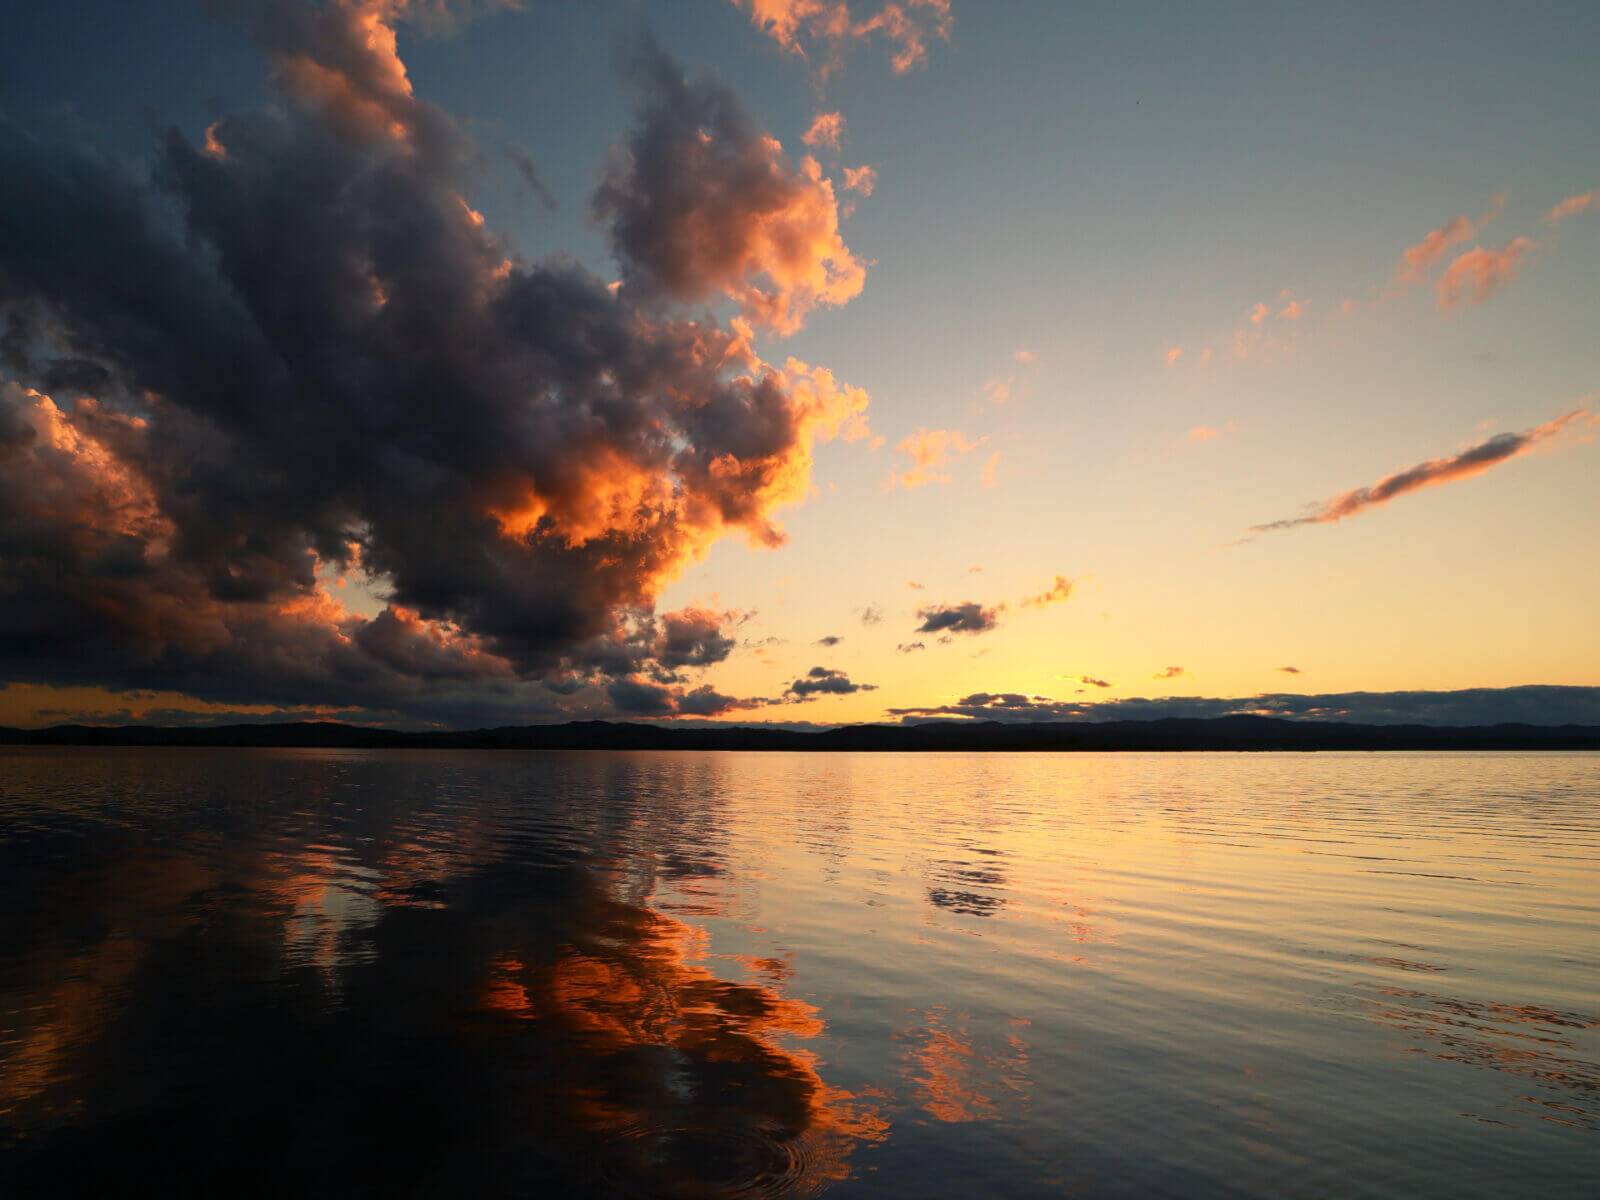 Emotive sunset by the lake